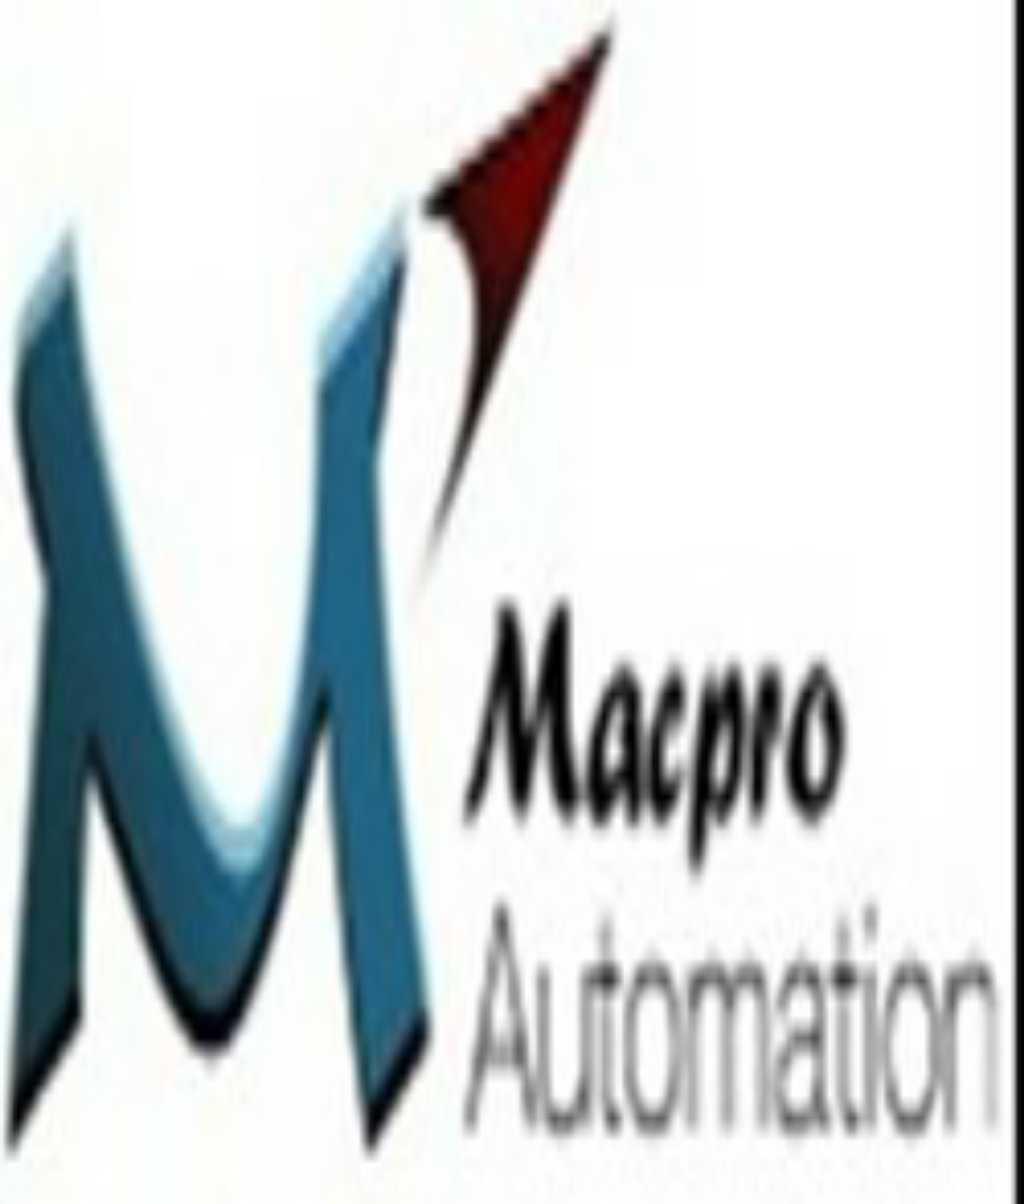 Macpro Automation Pvt. Ltd.